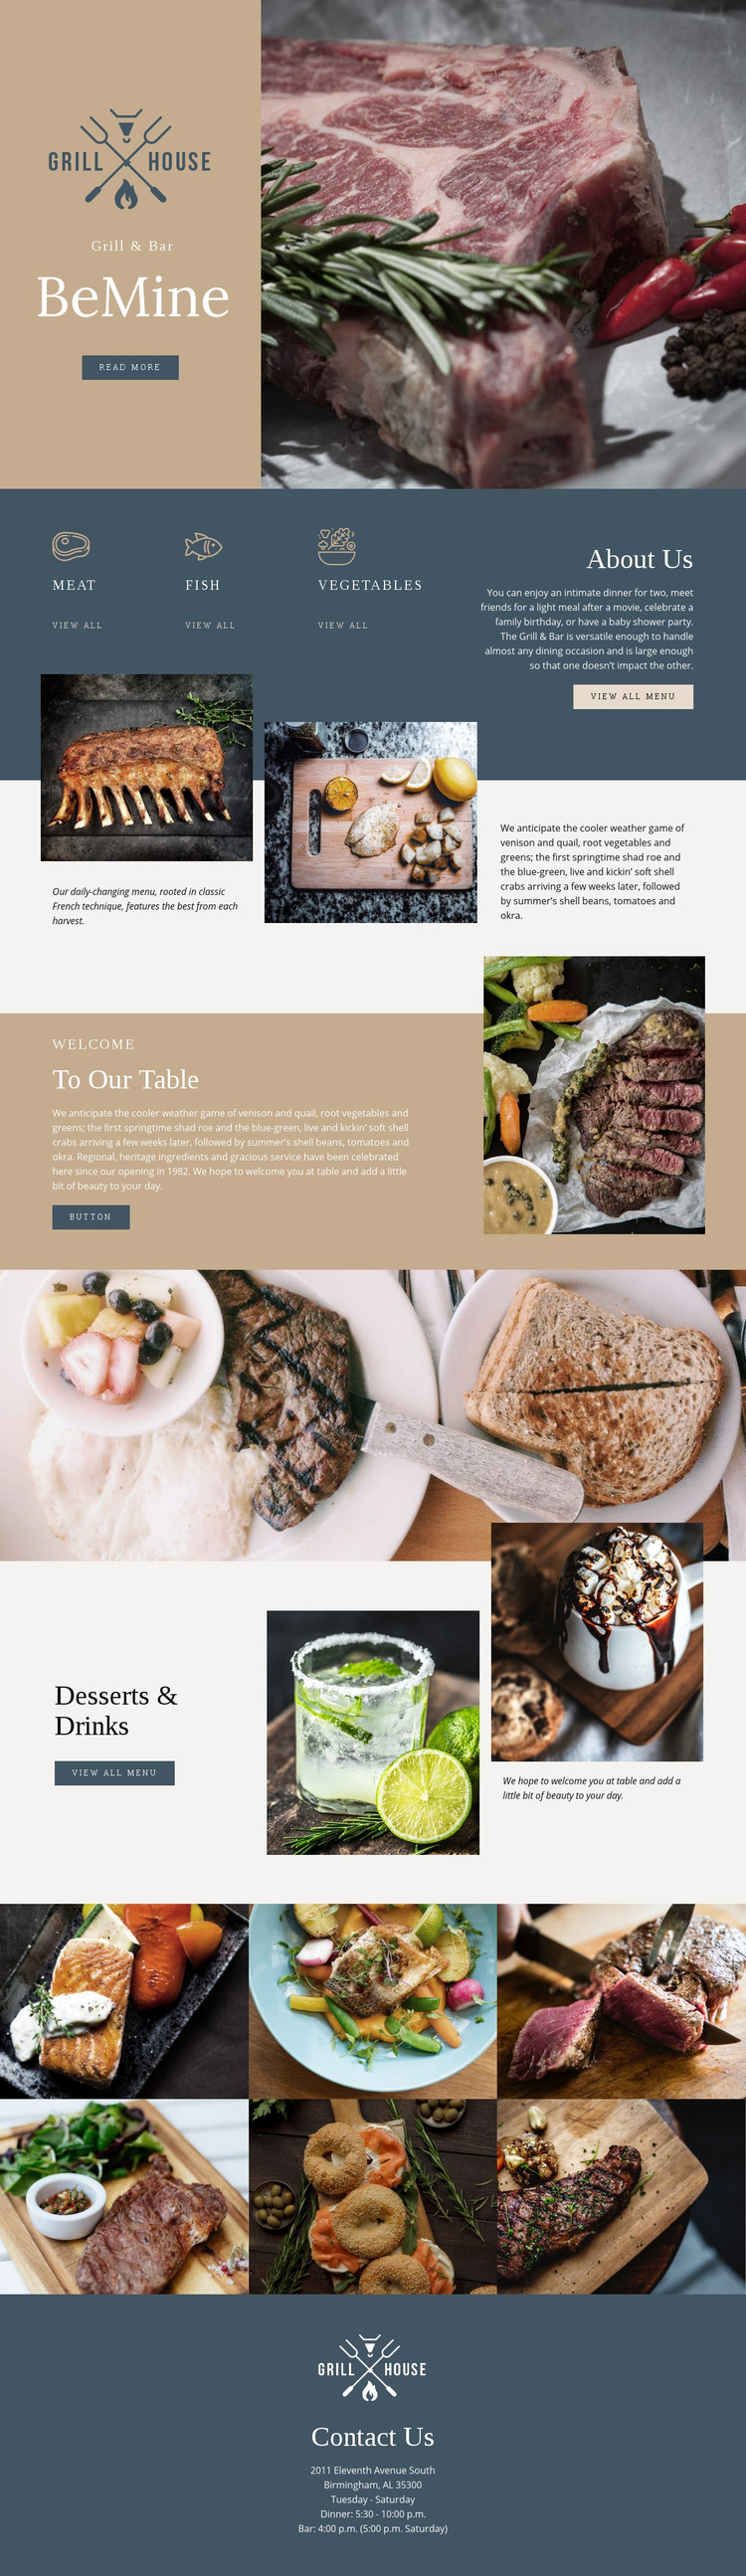 Finest grill house restaurant Homepage Design